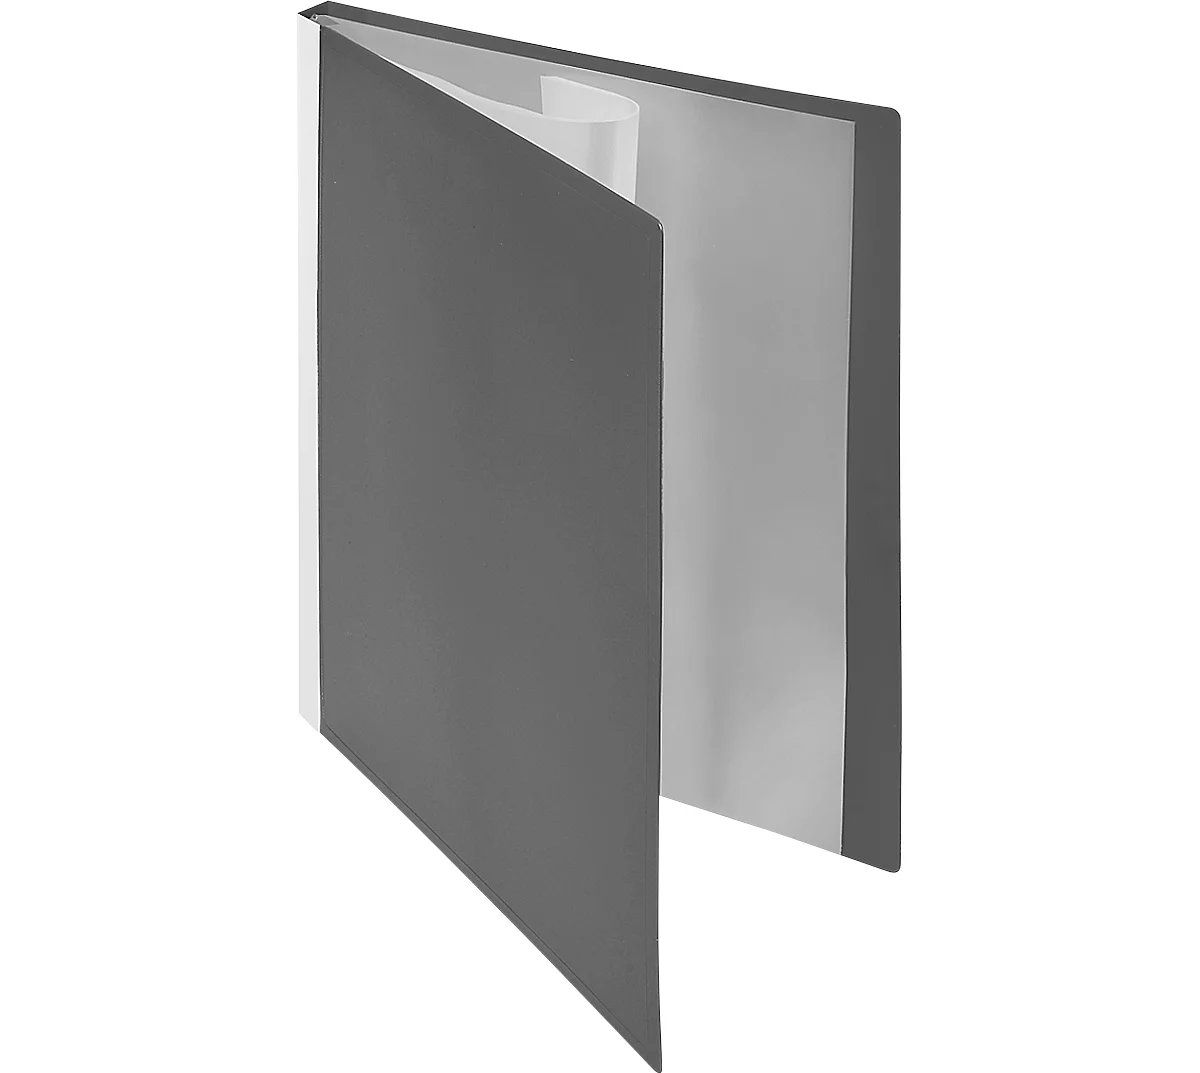 FolderSys PP-Sichtbuch, für DIN A4, 20 Sichthüllen, grau